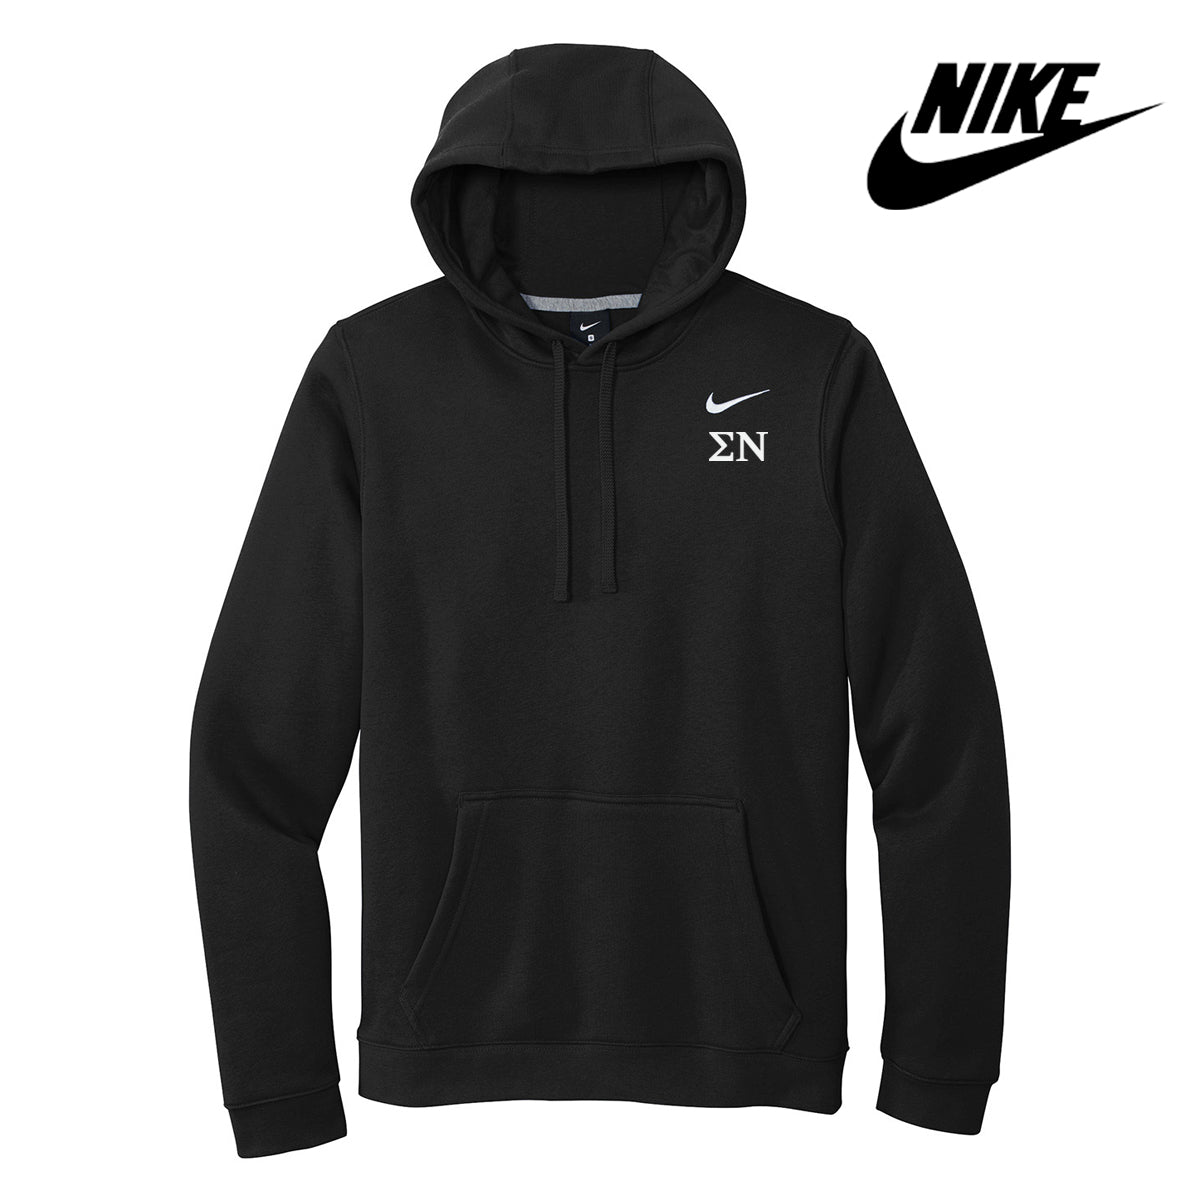 Sigma Nu Nike Embroidered Hoodie